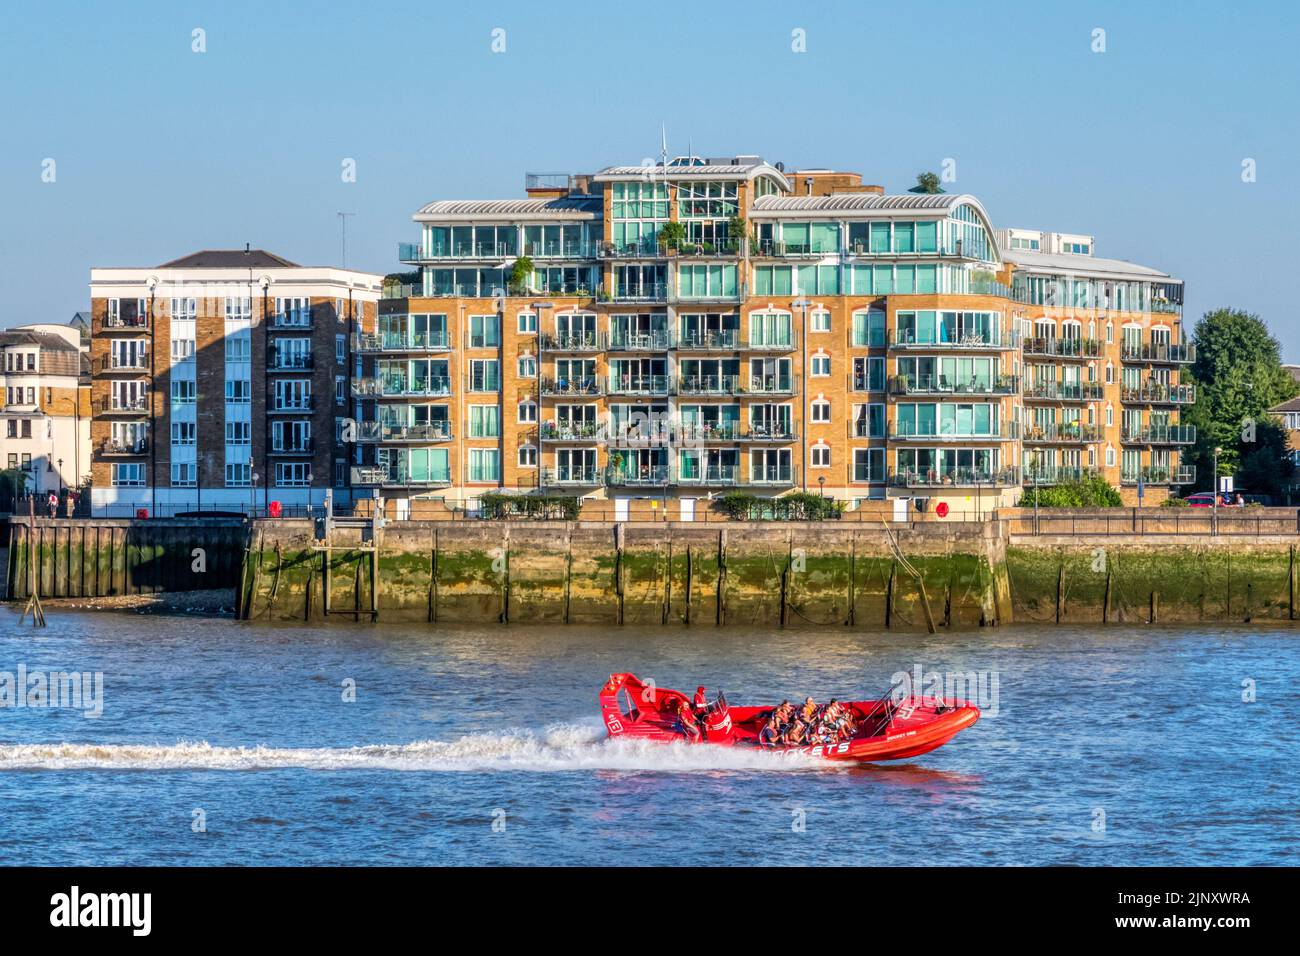 UN RIB de Thames Rockets que pasa por la península de Rotherhithe en el río Támesis, Londres. Foto de stock